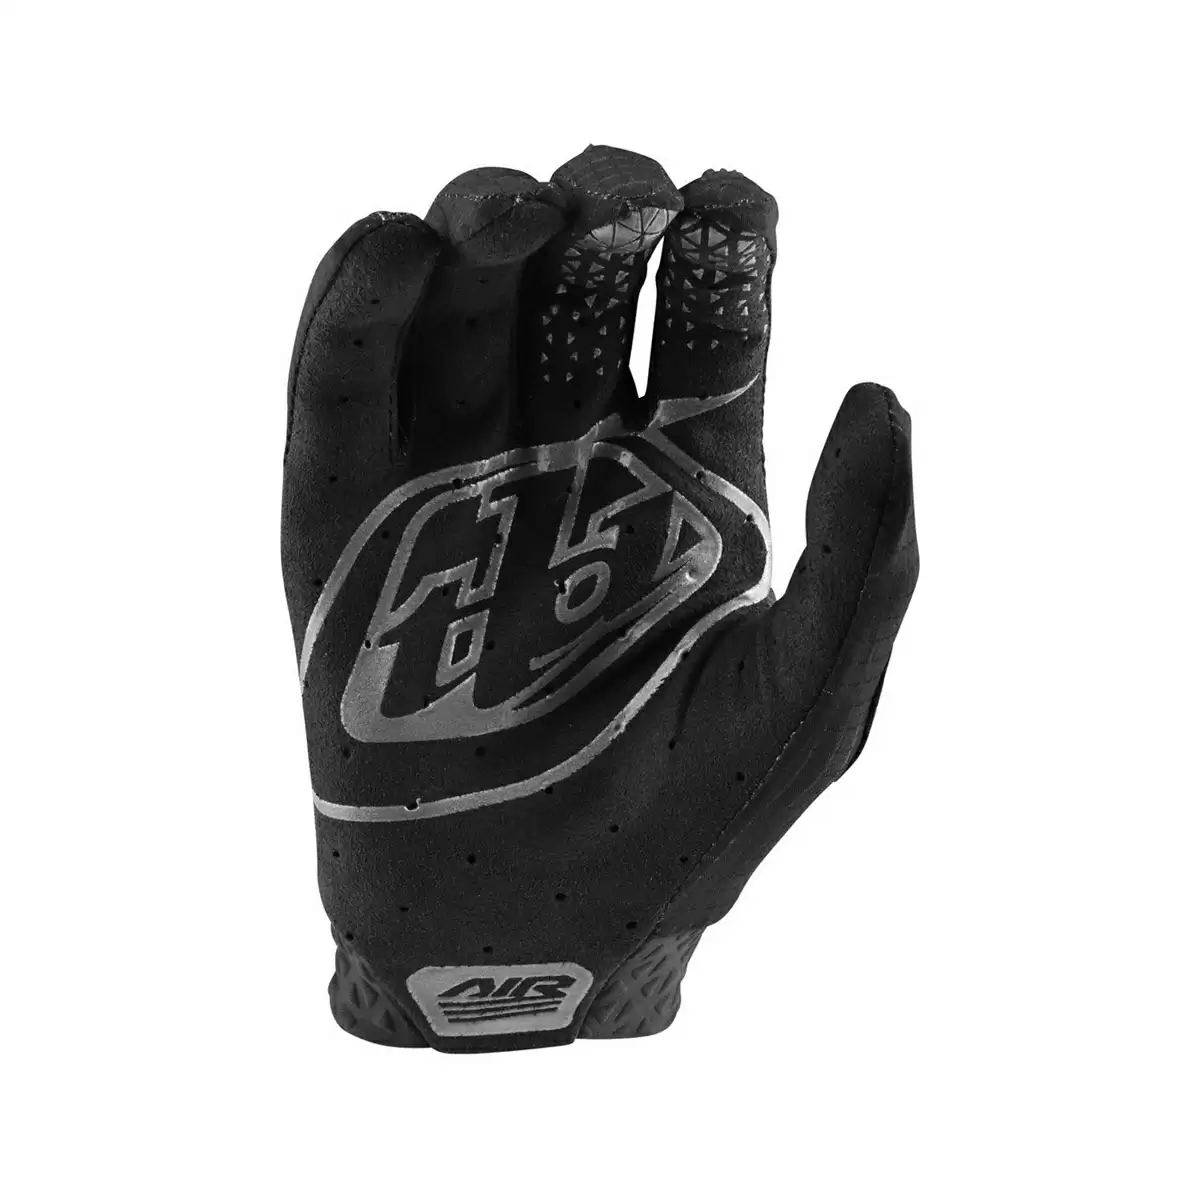 MTB-Handschuhe Air-Handschuhe Schwarz Größe L #2